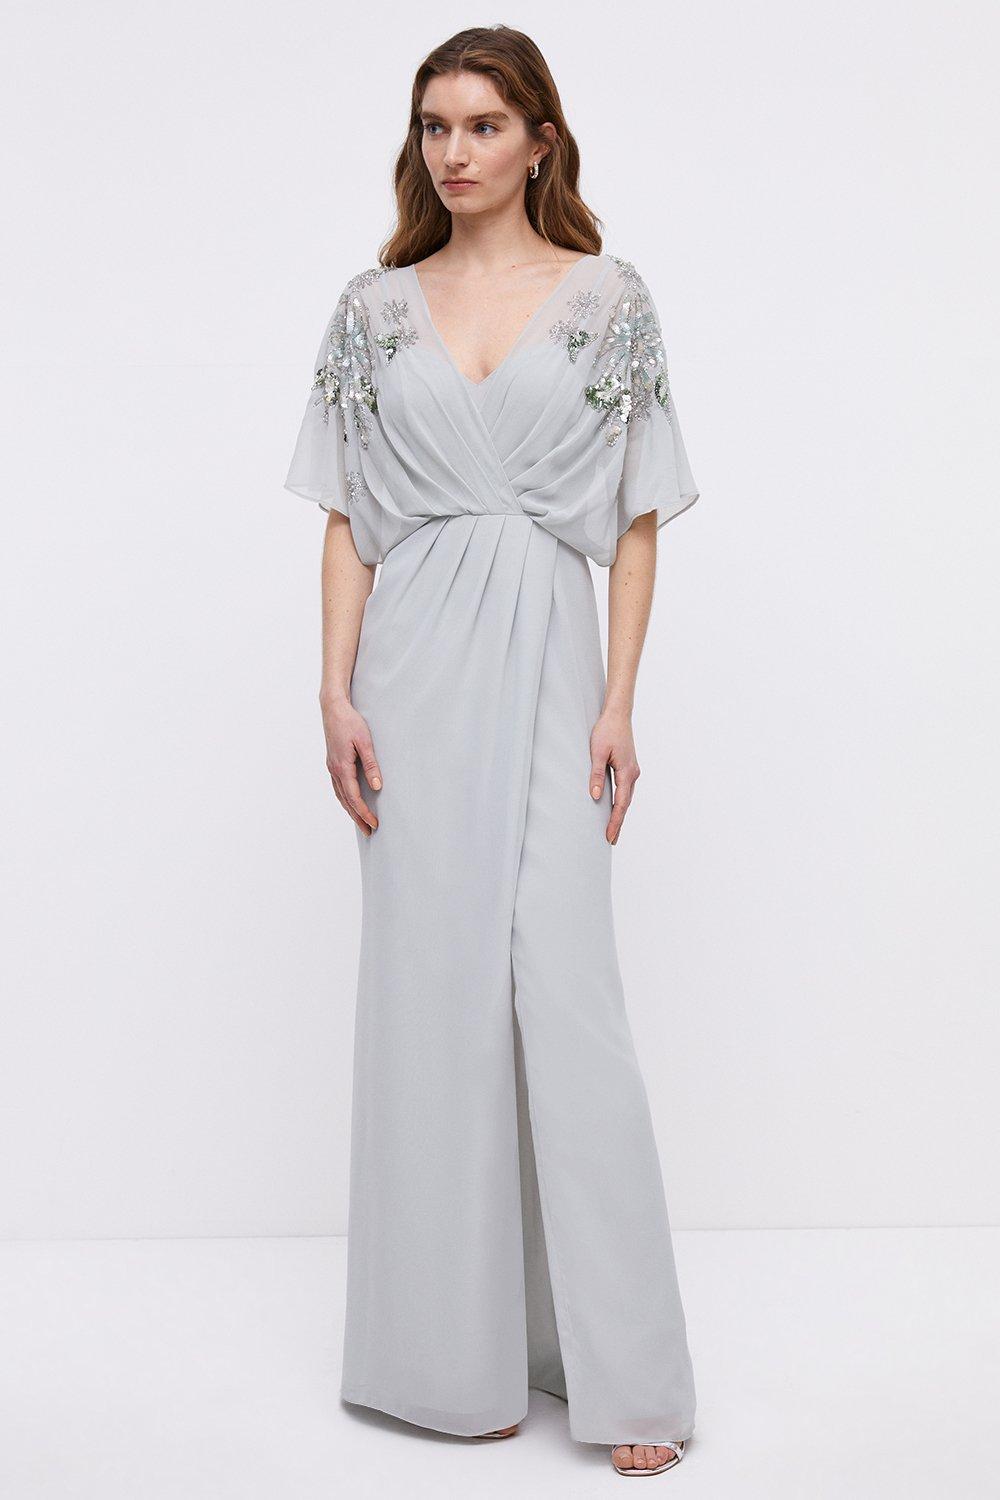 Wrap Top Sequin Kyoto Embellished Bridesmaids Maxi Dress - Silver Grey